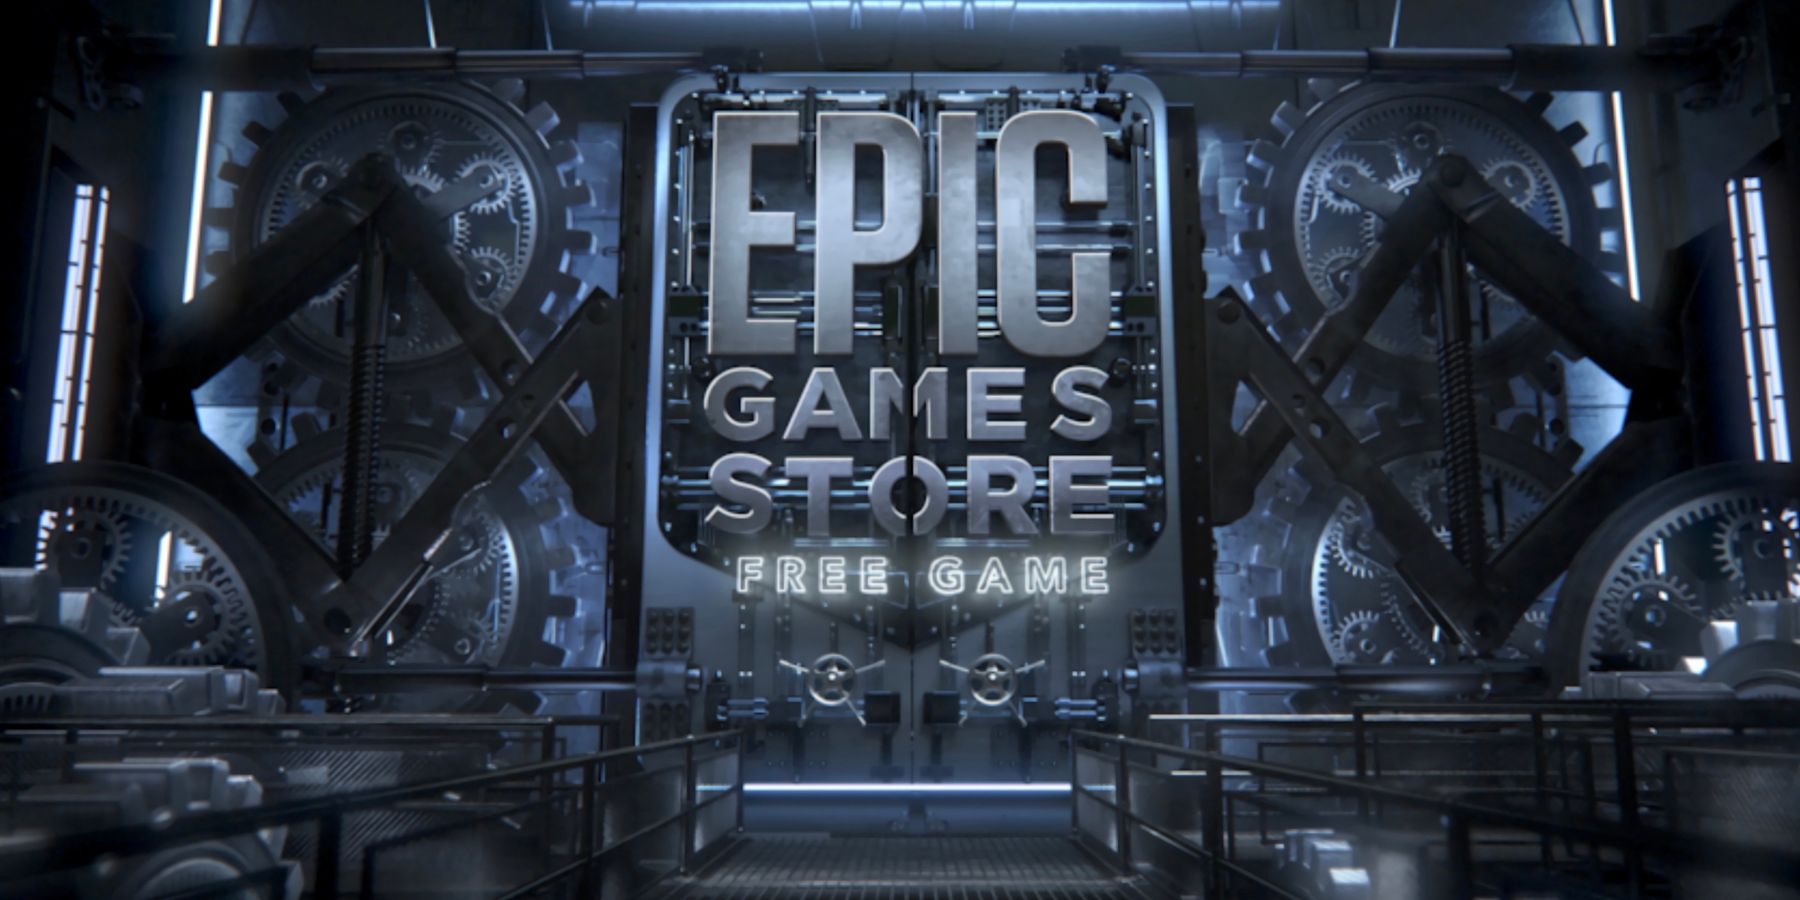 Epic Games free game vault